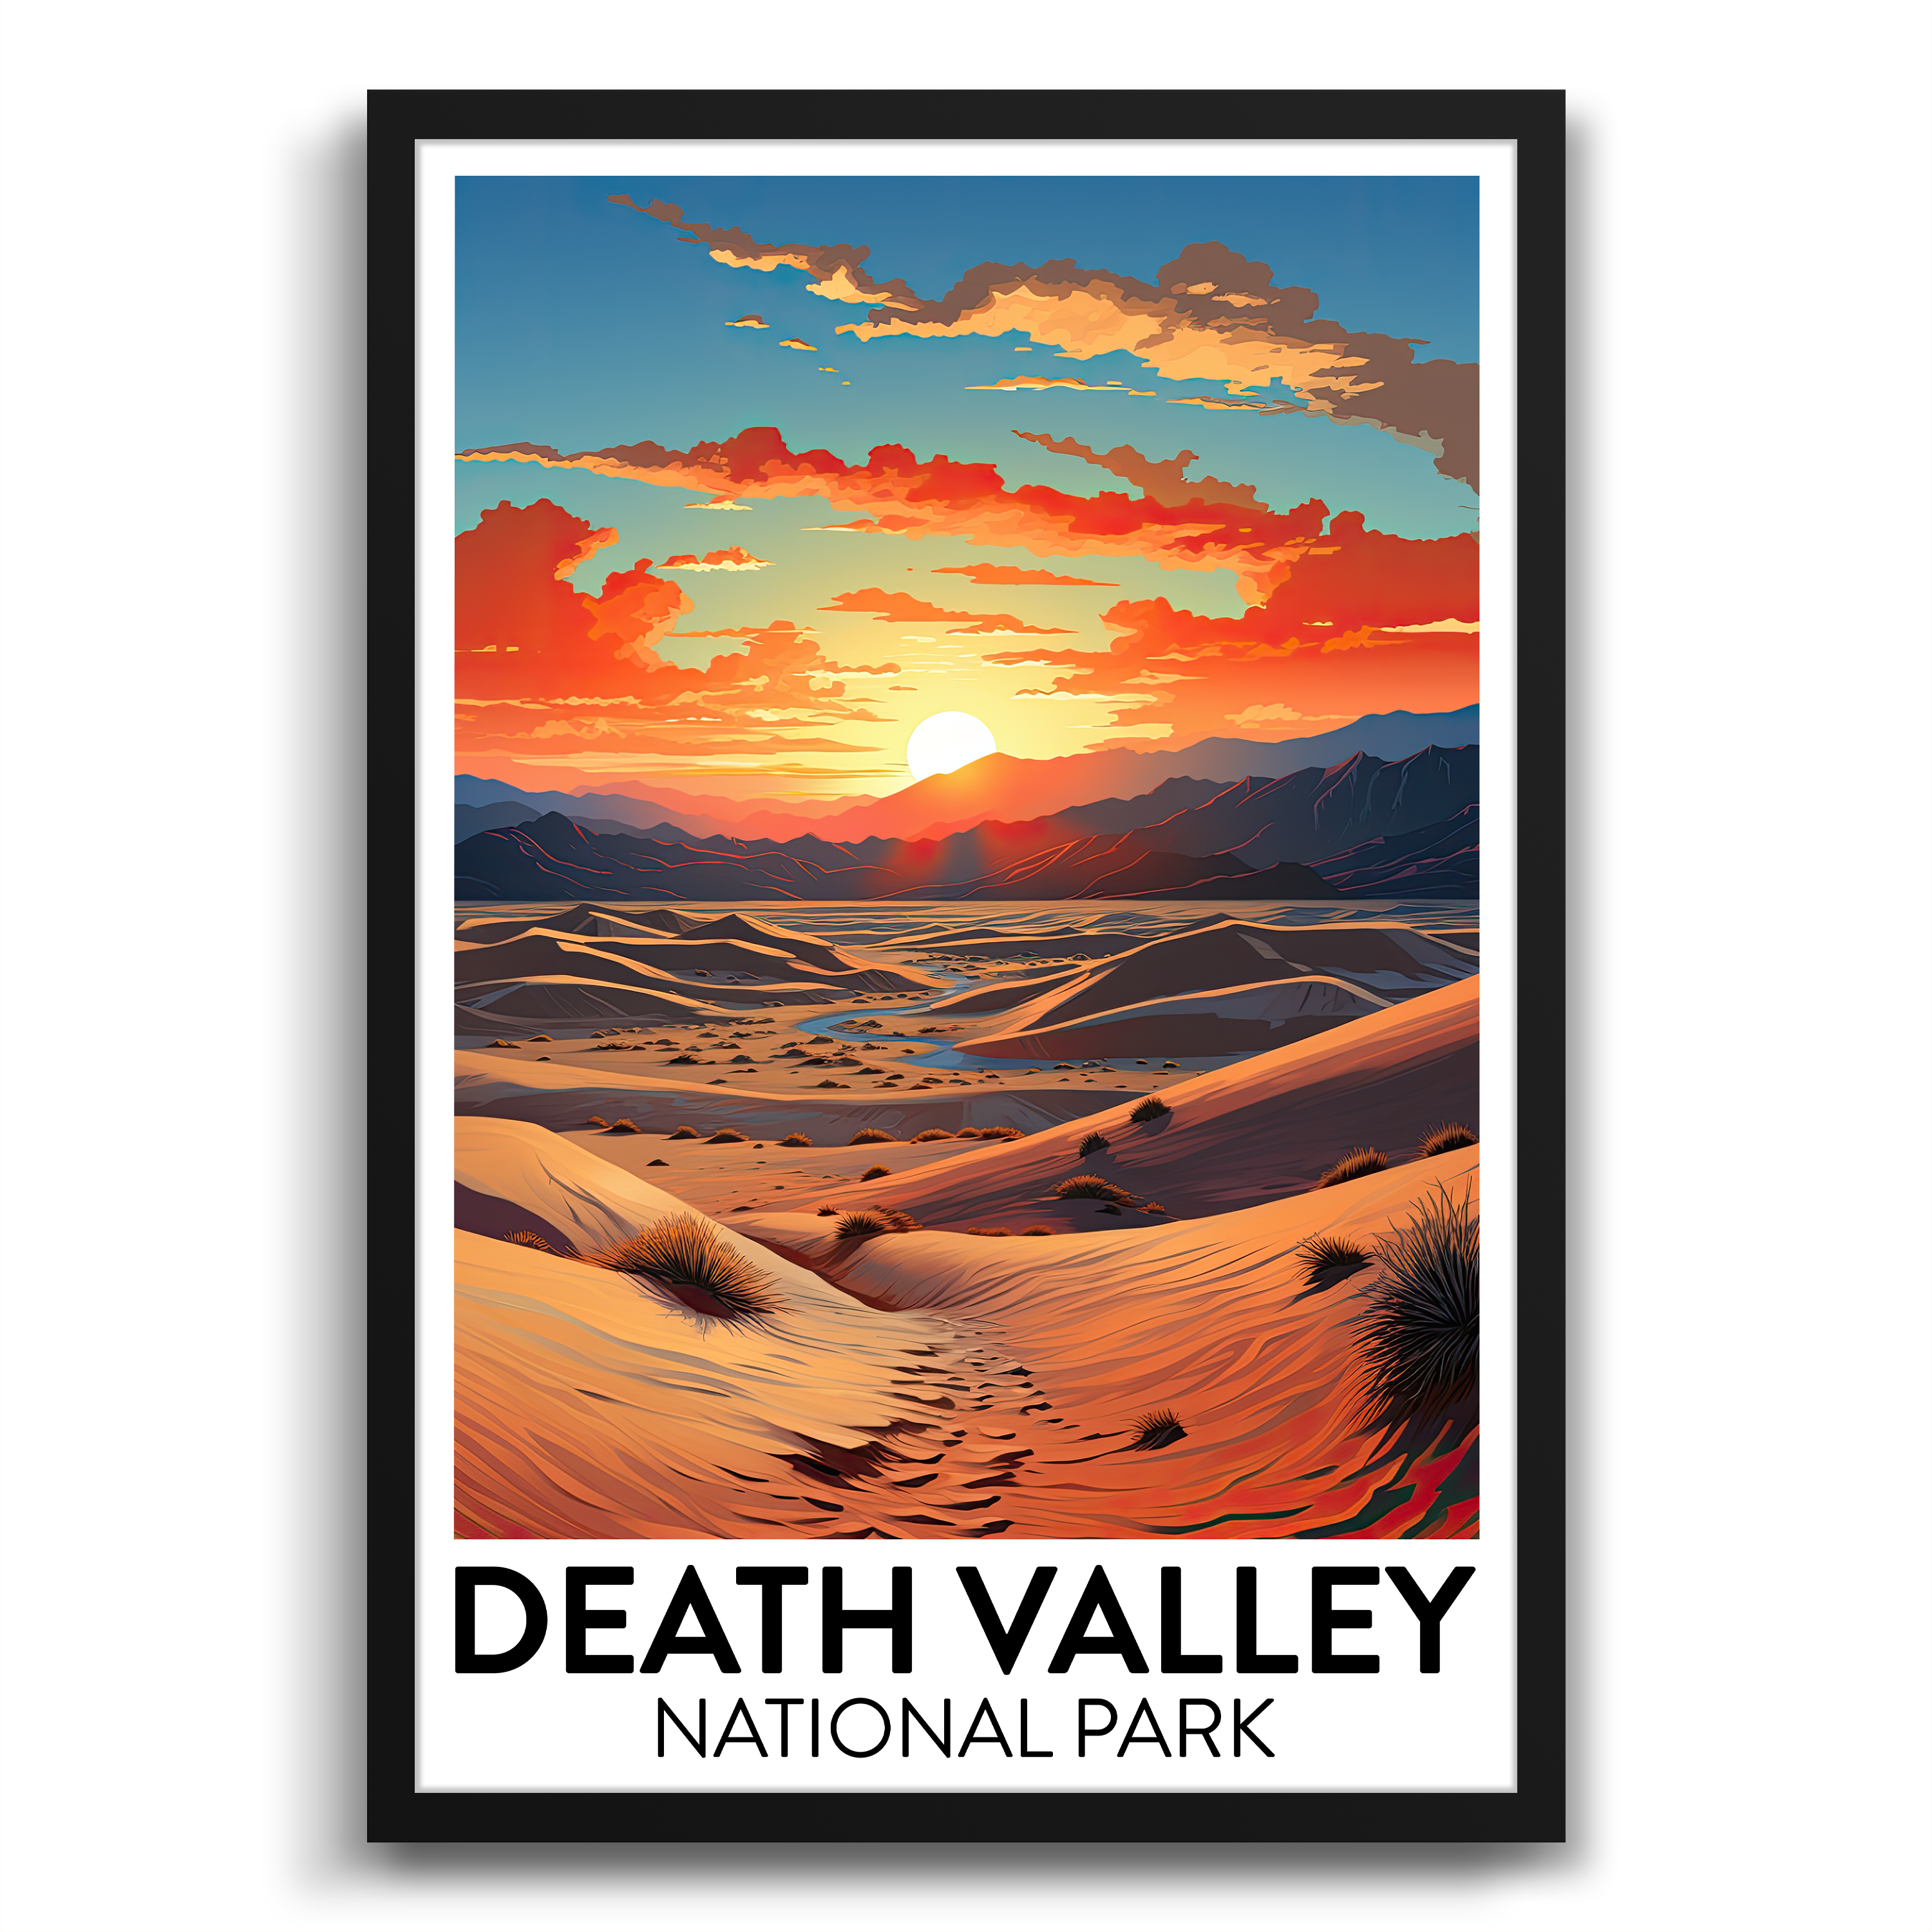 Desert Dreams - Death valley National park poster